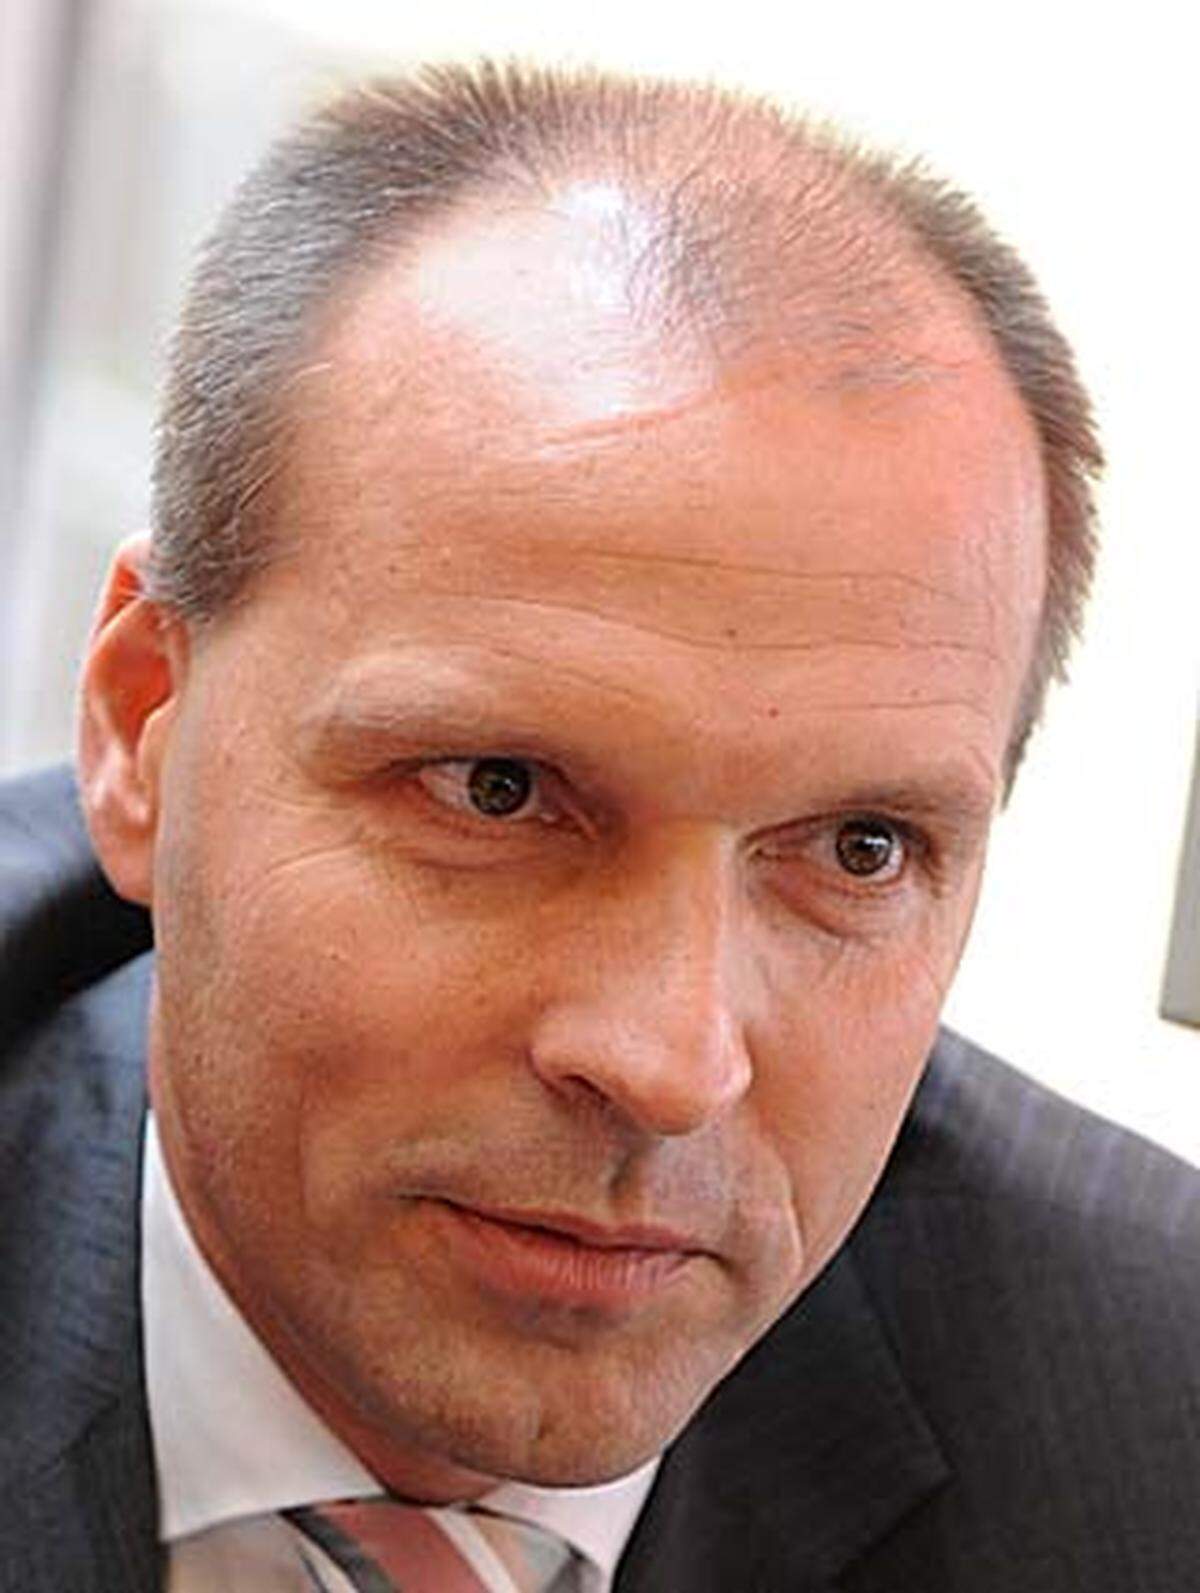 Bekennender "Olympe". Jörg Haider verhinderte ihn 2004 als Justizminister.